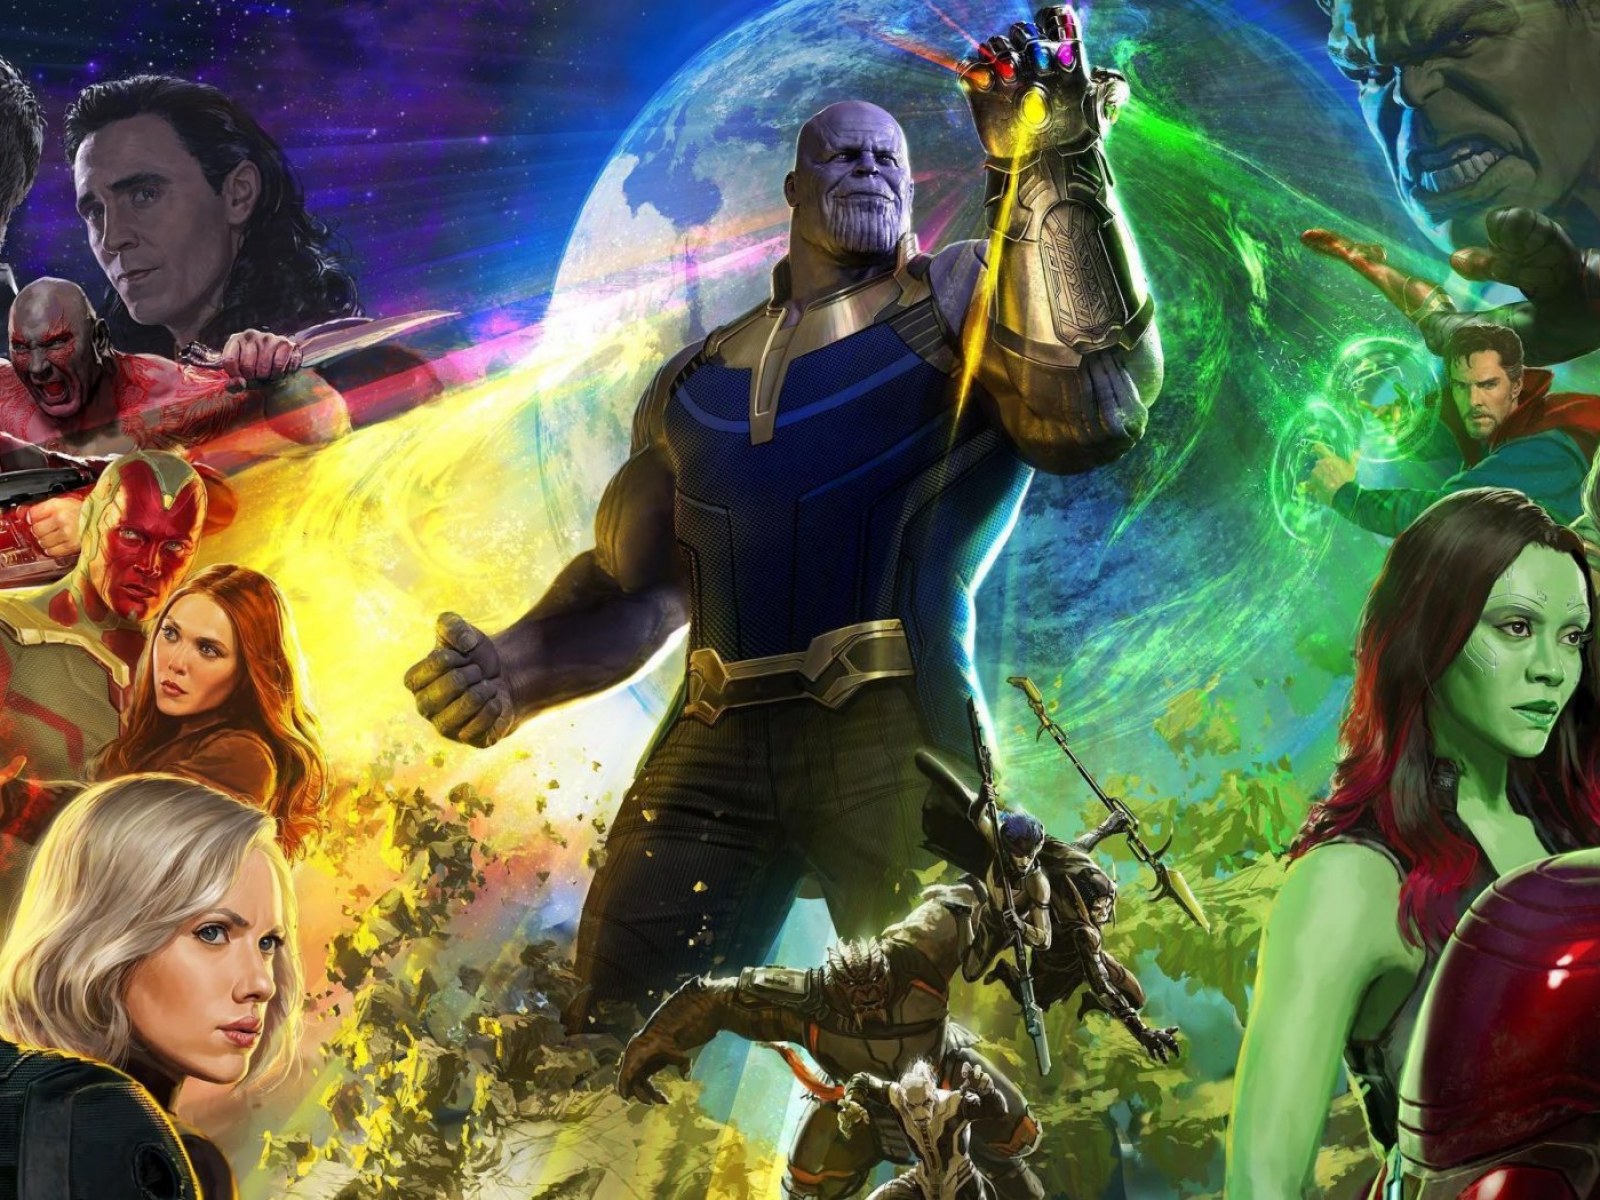 Stan Lee With Avengers Infinity War Superheros Artwork Wallpapers